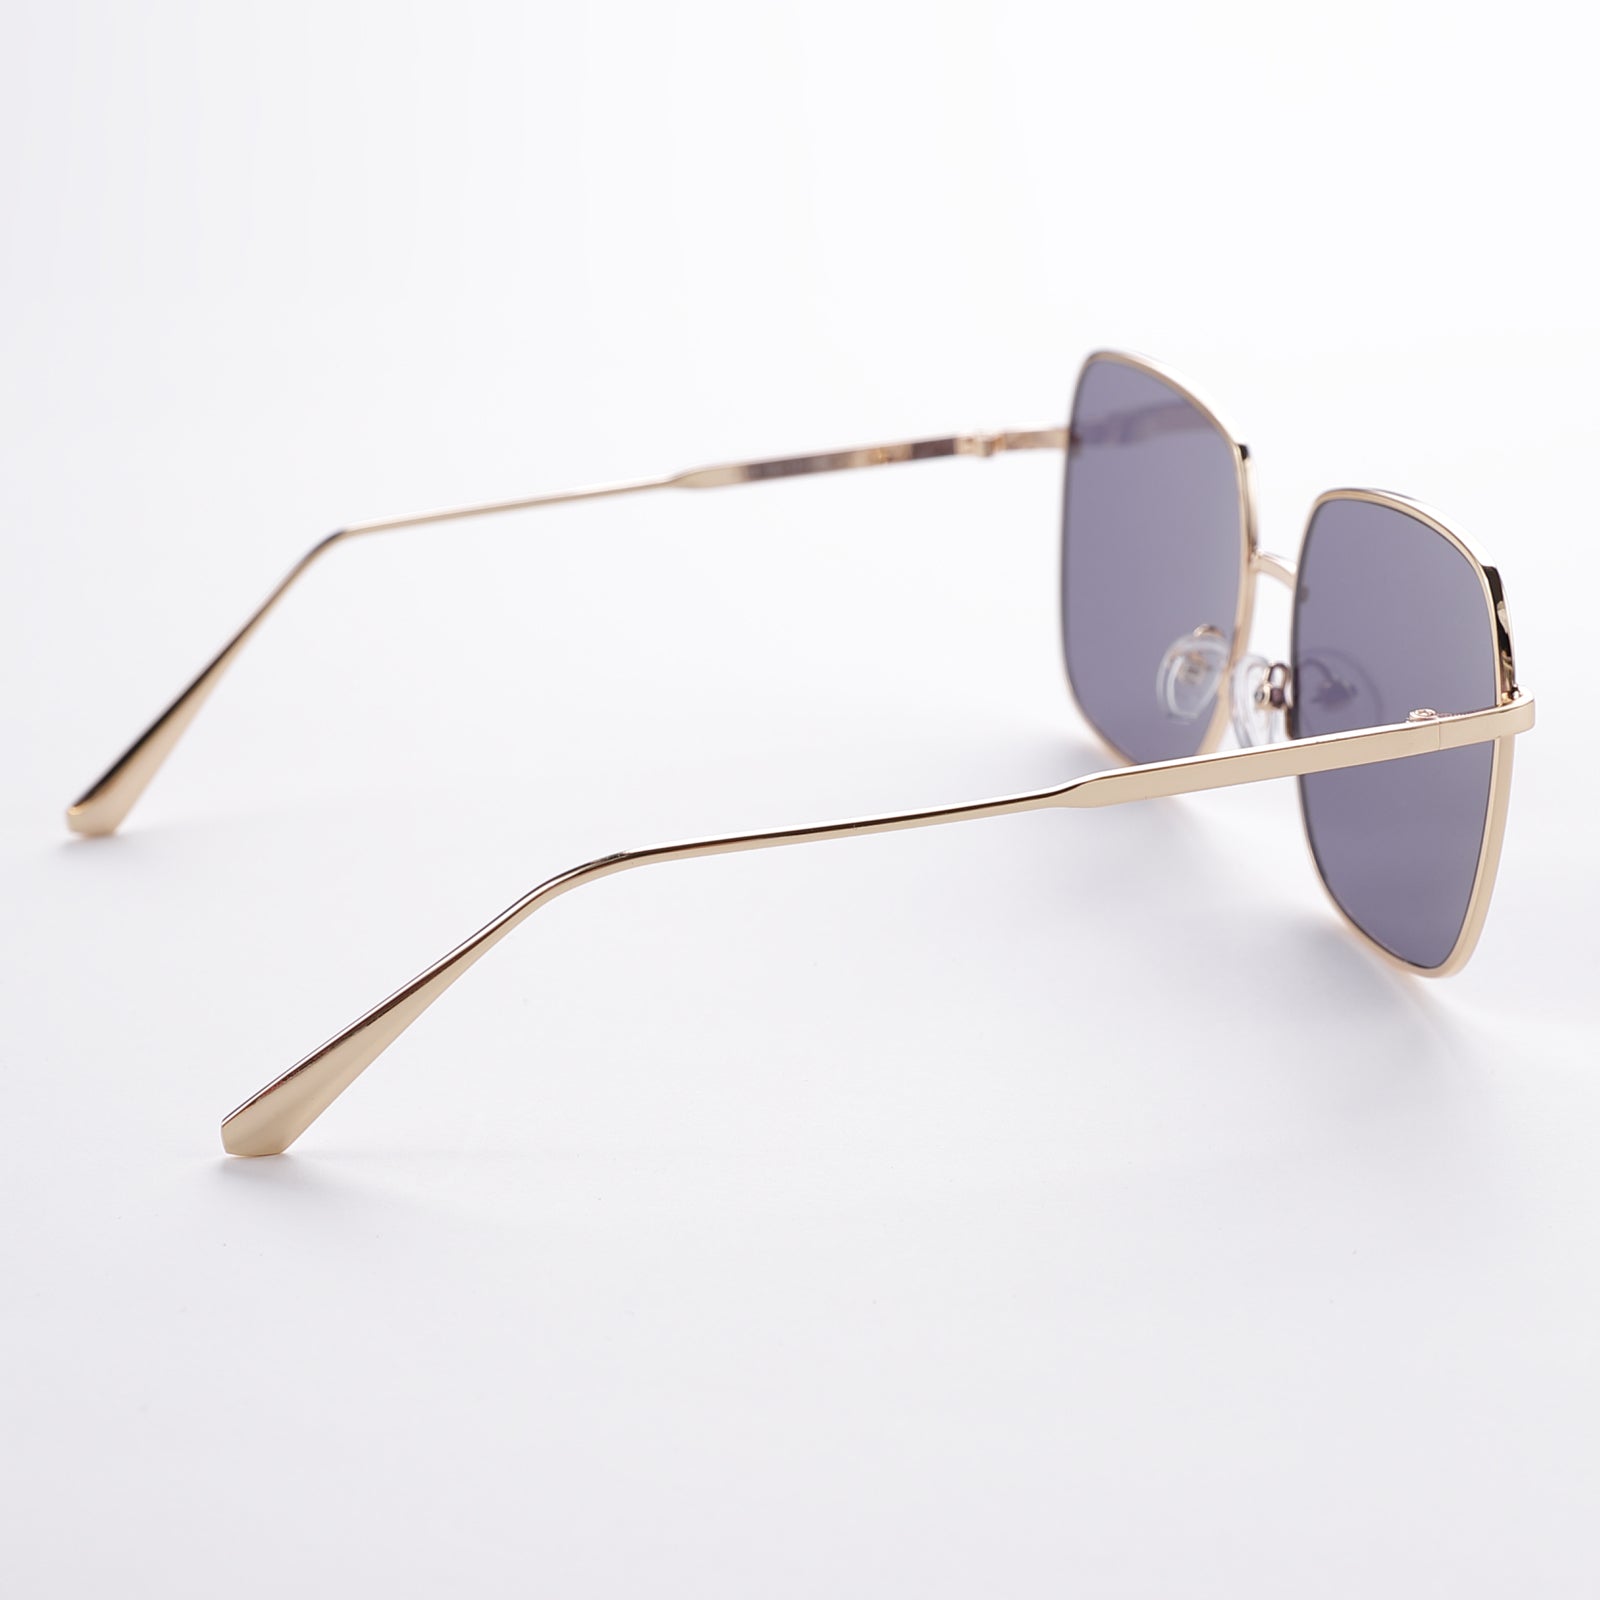 Dior geo sunglasses, JUSQU'À 55% OFF grande réduction